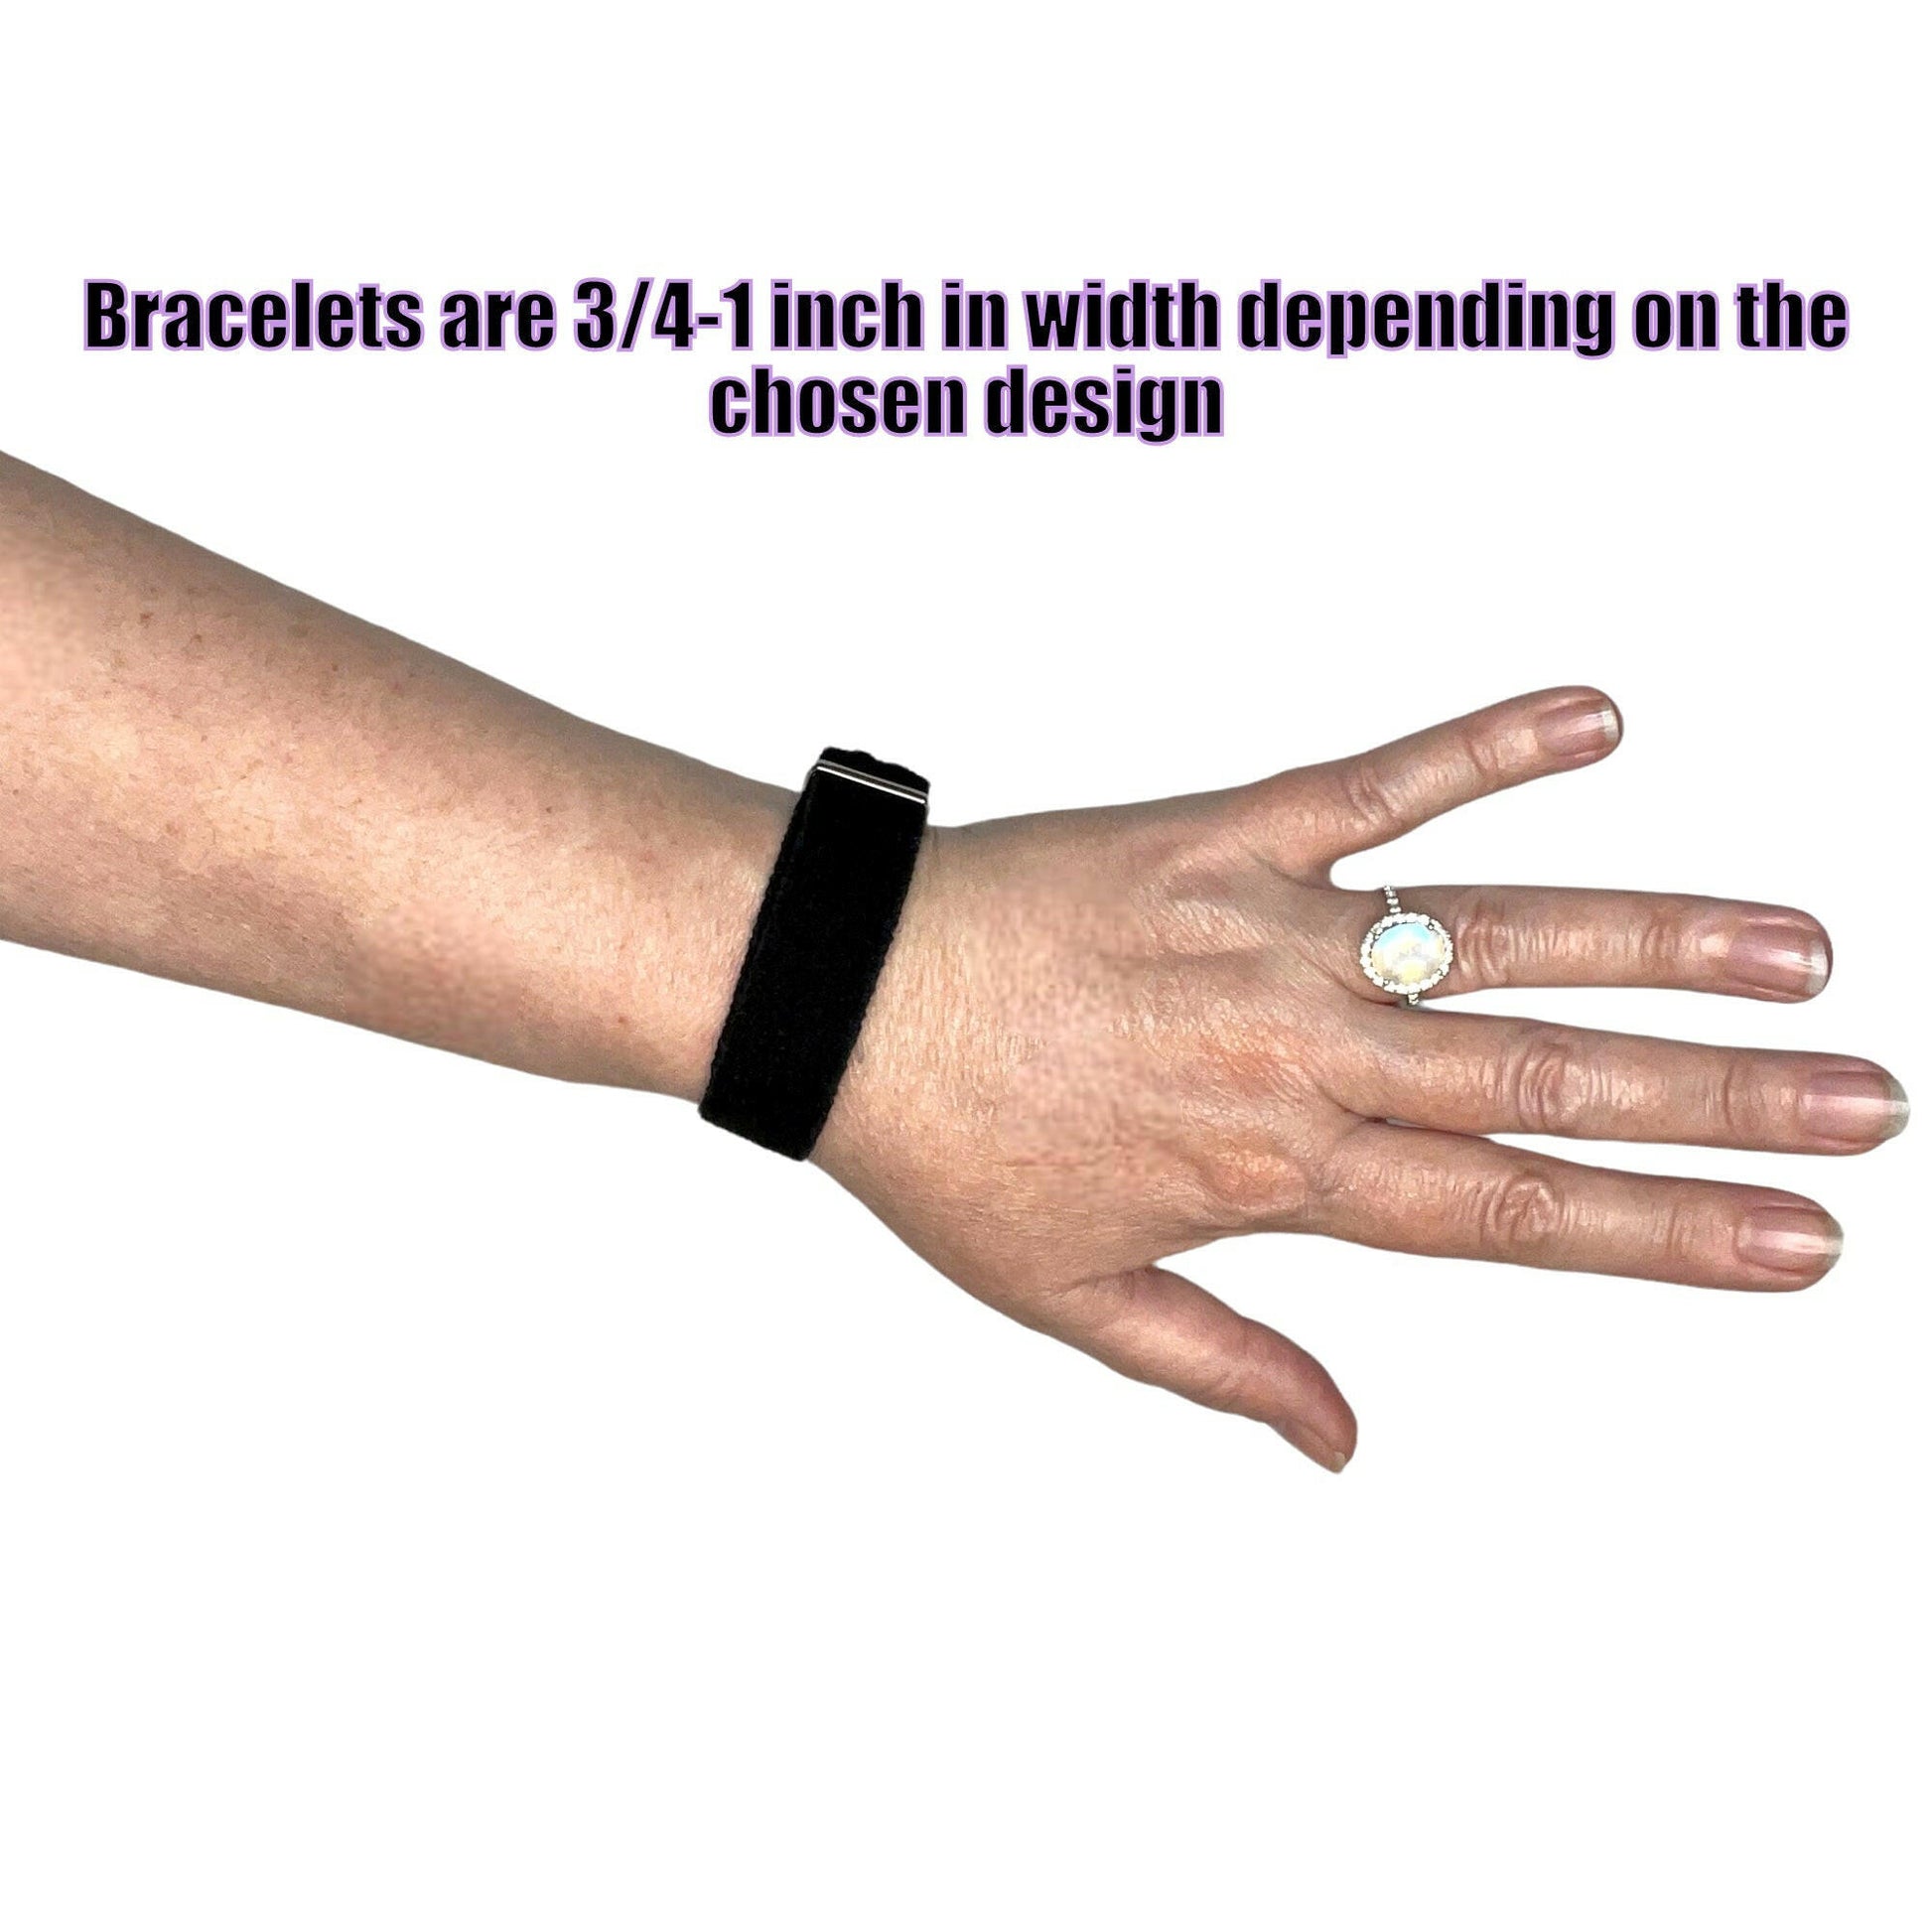 Anti Anxiety Bracelet-Adjustable Calming Acupressure Band-Natural Stress Relief-Single - Acupressure Bracelets